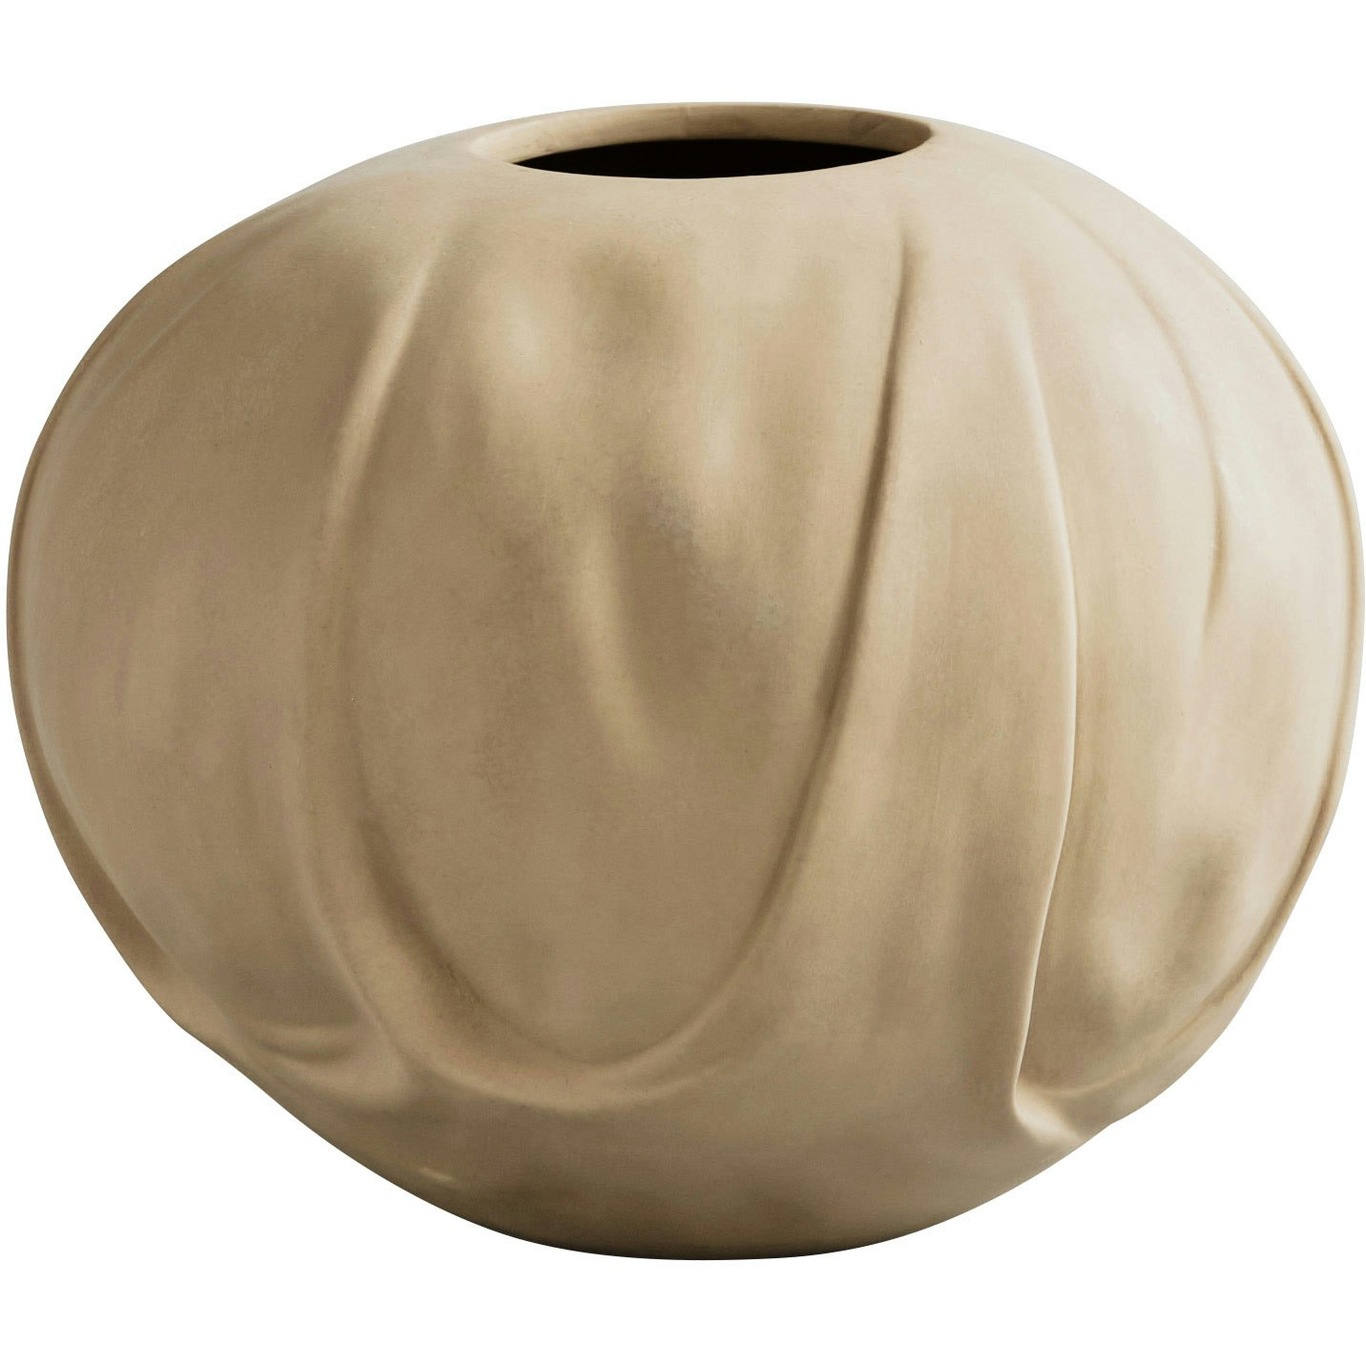 Orimono Vase 30 cm, Sand